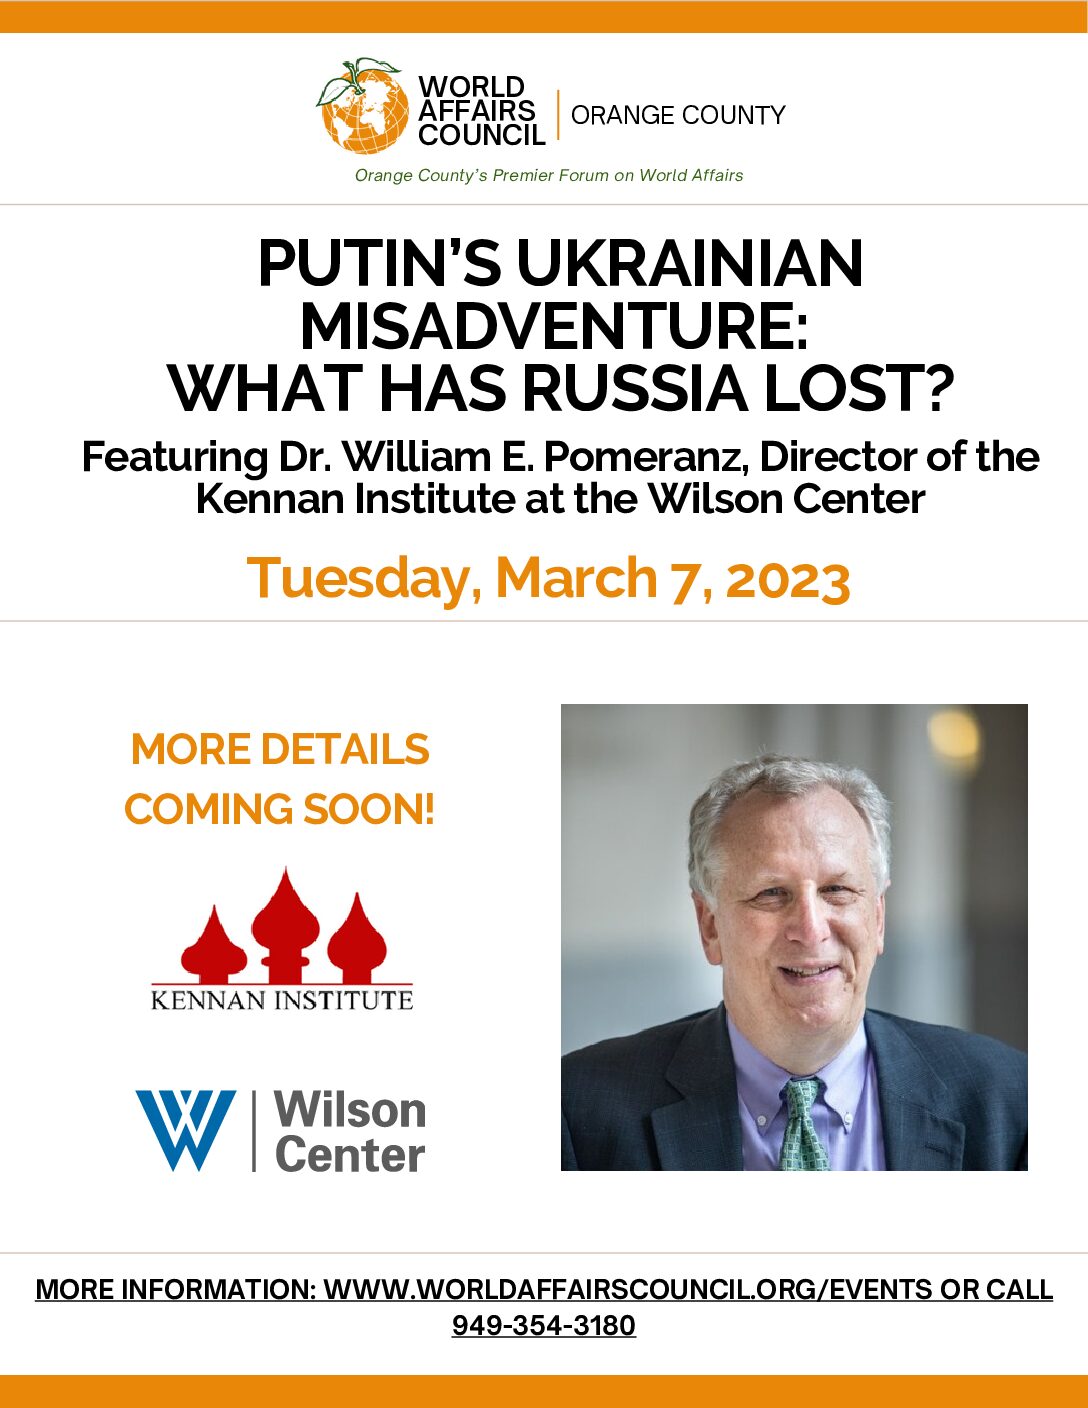 Putin’s Ukrainian Misadventure: What has Russia Lost? Featuring Dr. William E. Pomeranz, Director of the Kennan Institute at the Wilson Center